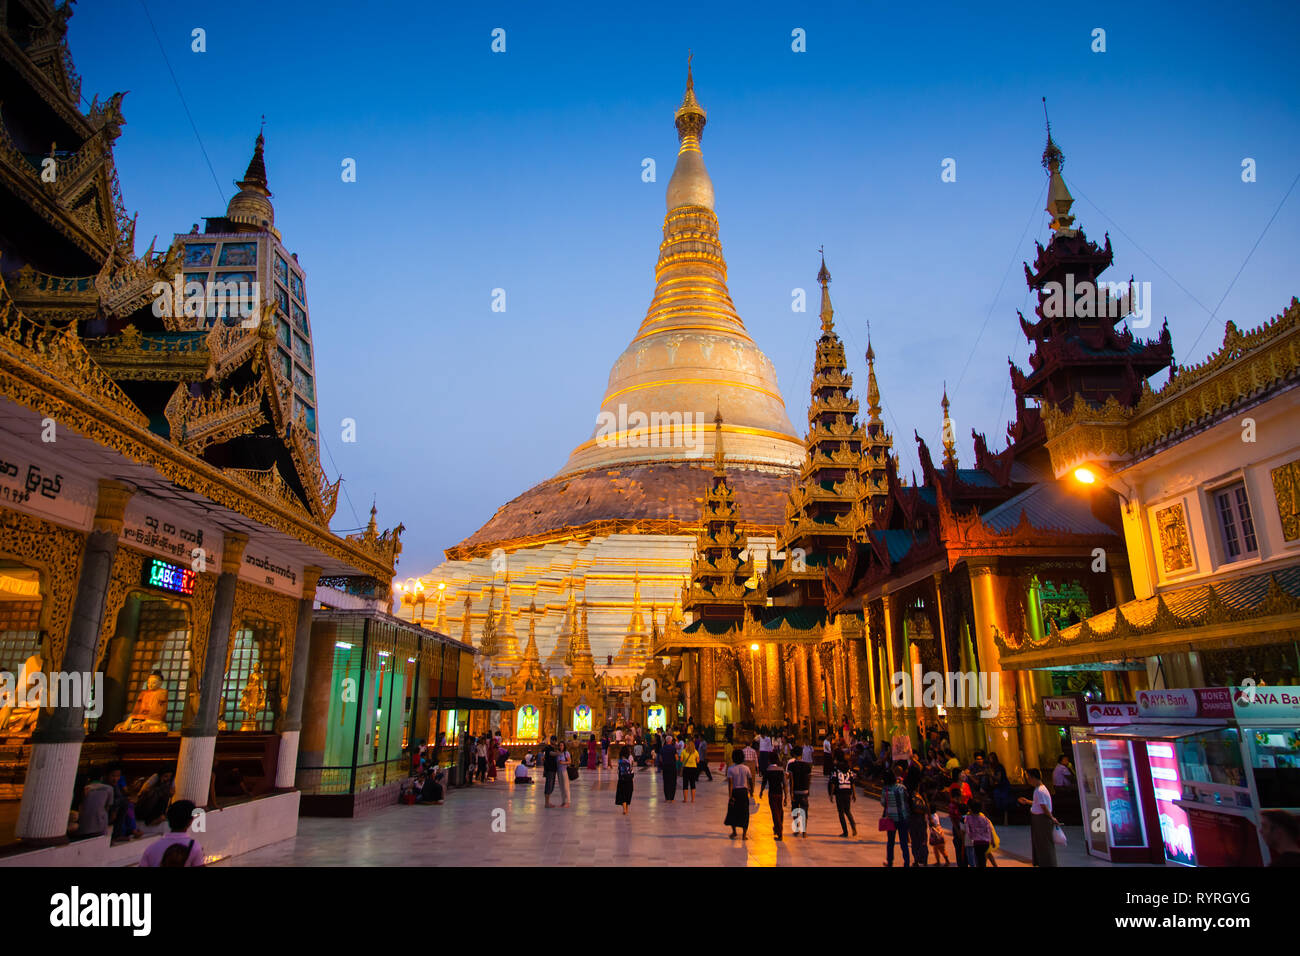 Die goldenen Minarette von Schwedagon Pagode in Yangon, Myanmar Stockfoto